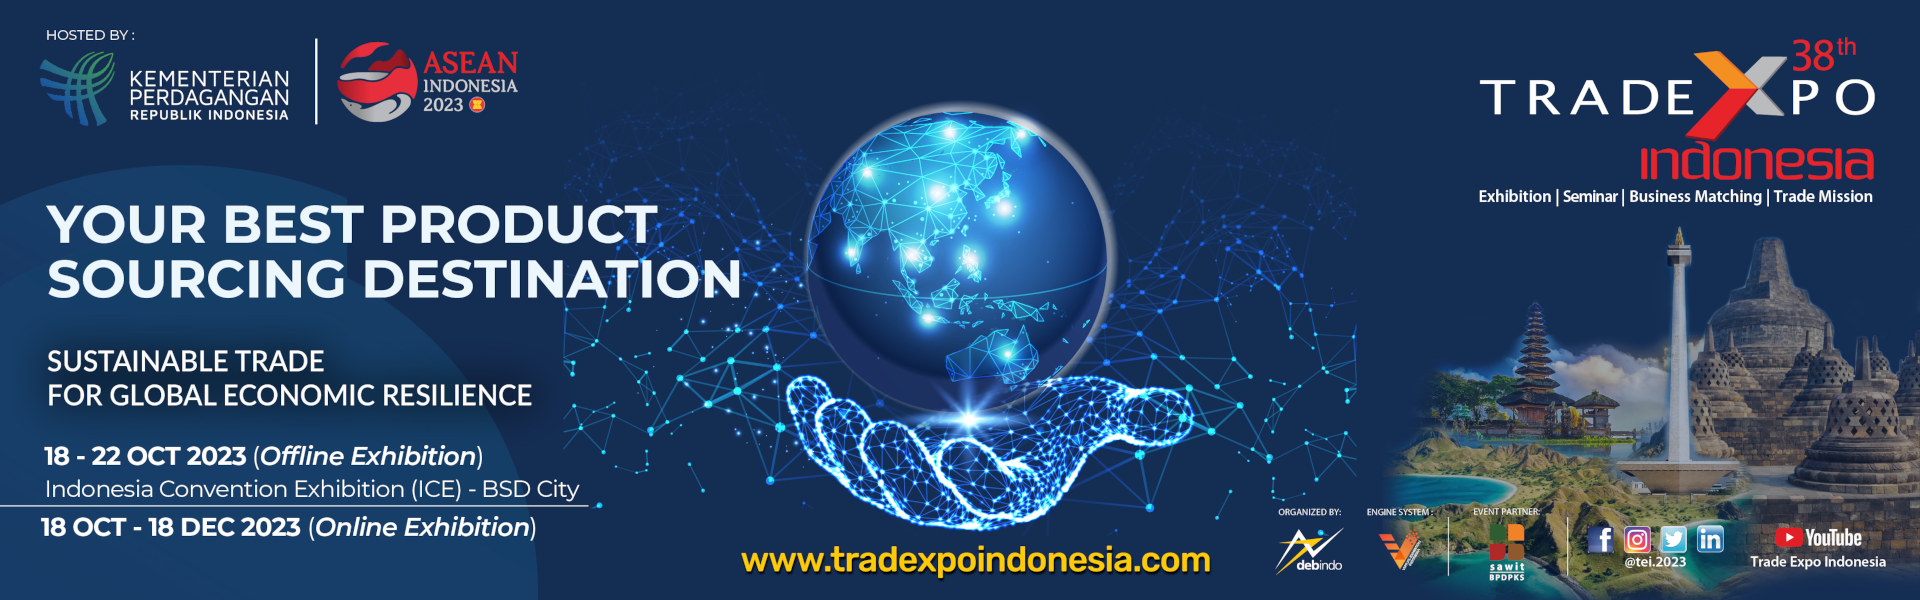 Trade Expo Indonesia 23